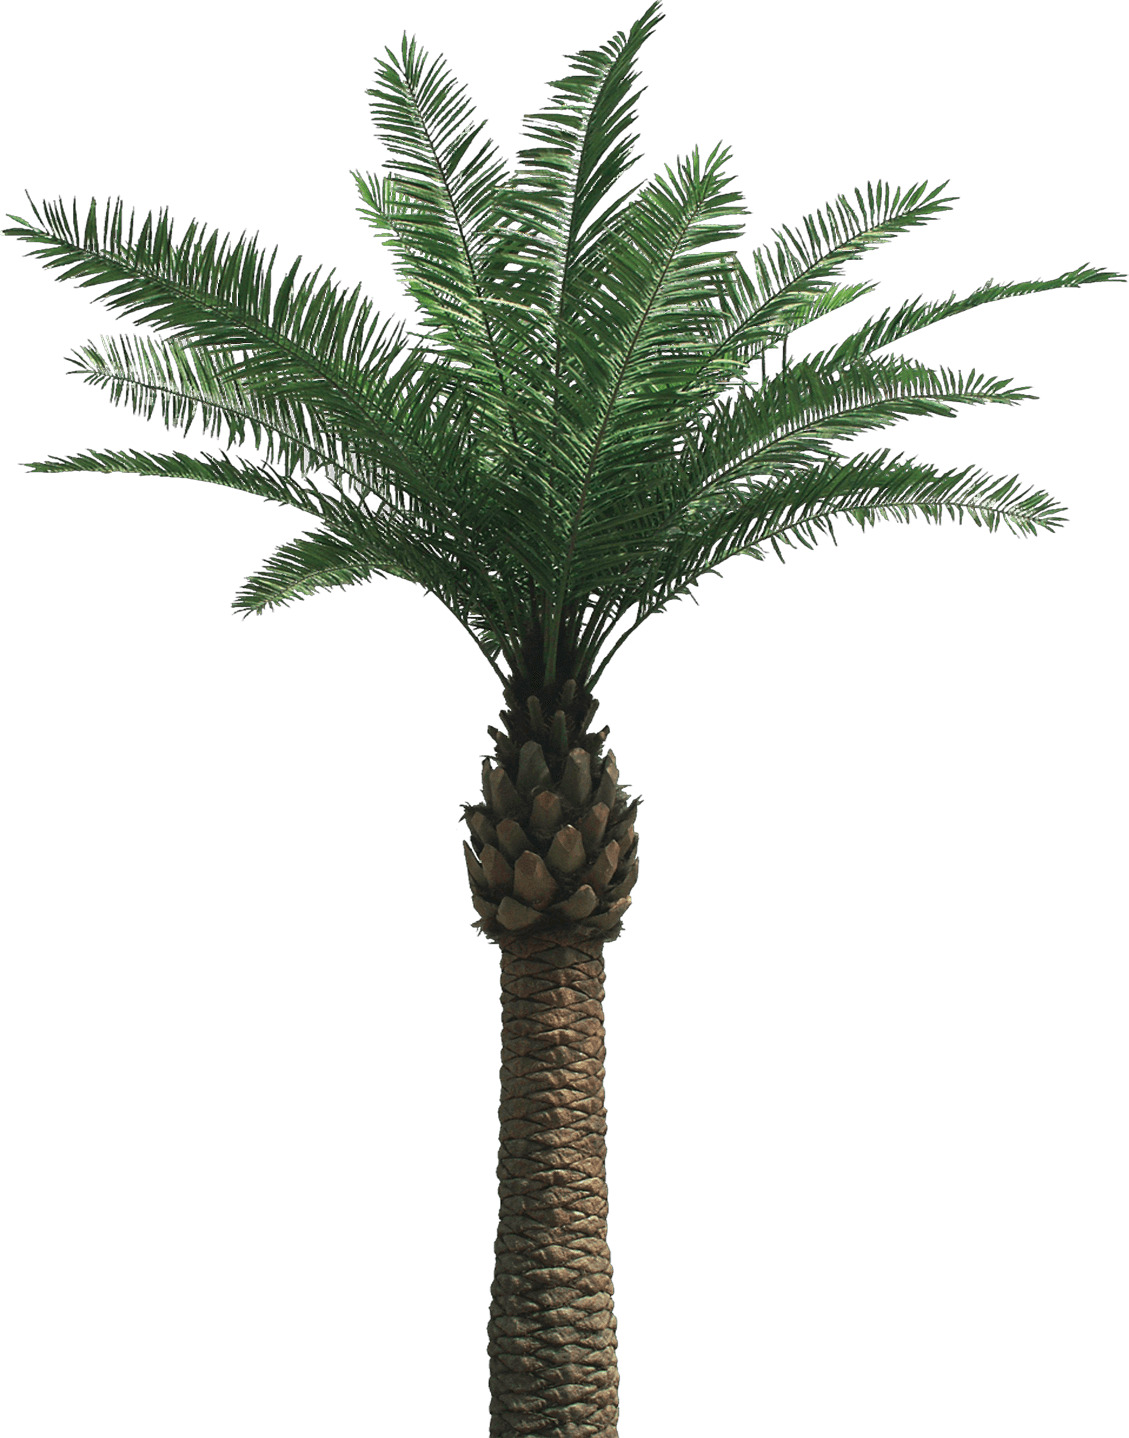 Large Palm Tree icons